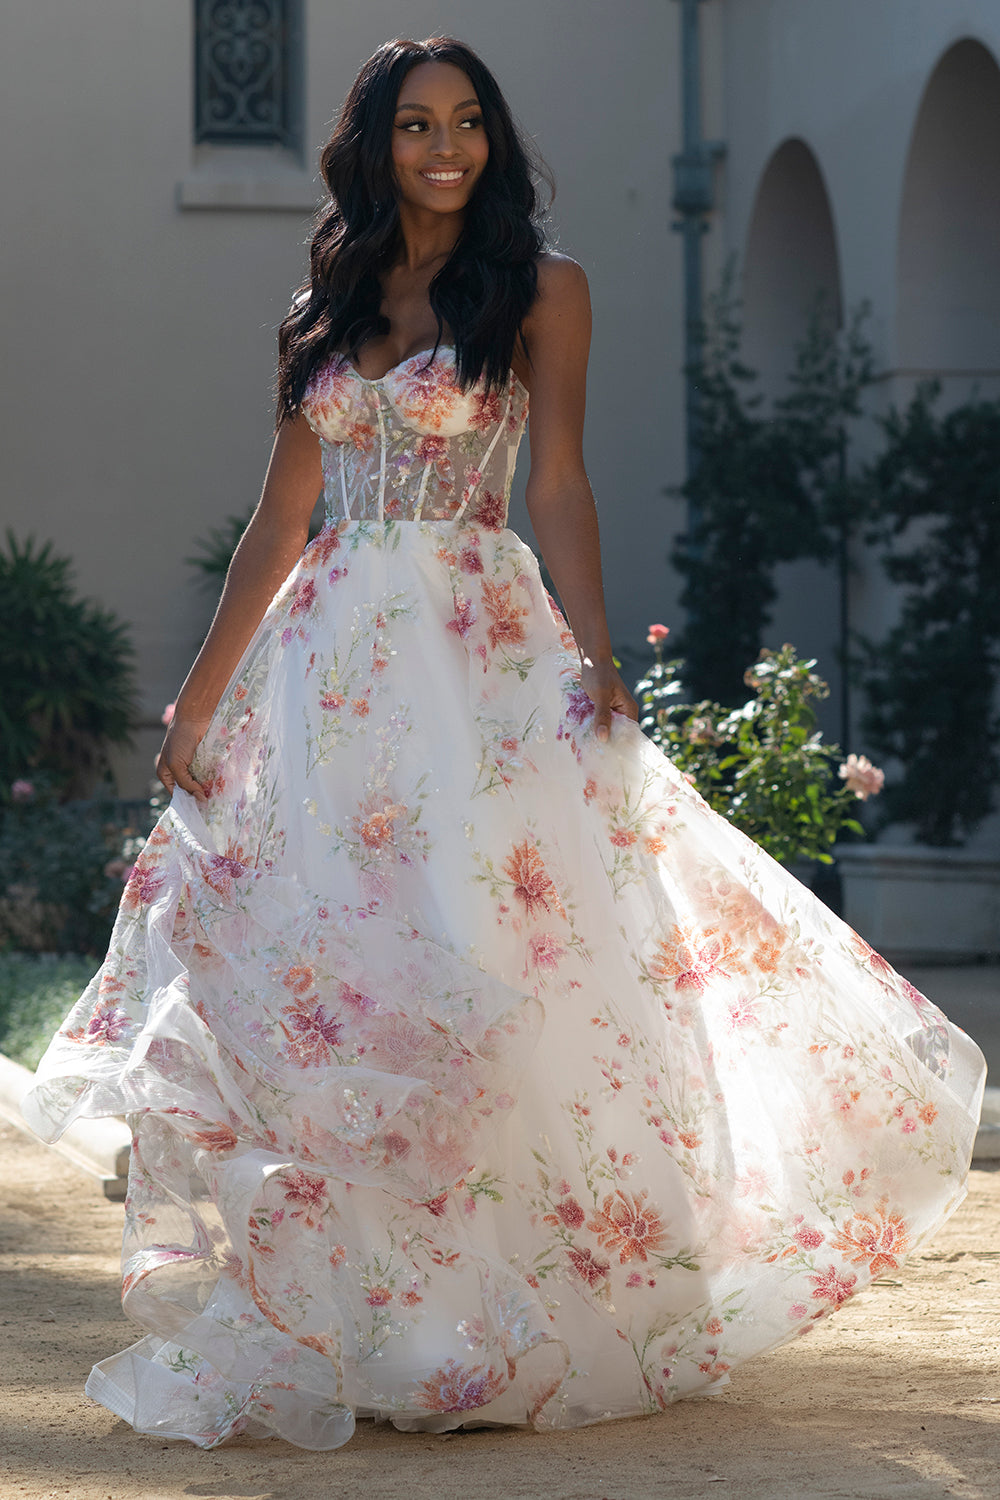 Strapless Sweetheart Corset A-Line Long Prom Dress AC5021-Prom Dress-smcfashion.com